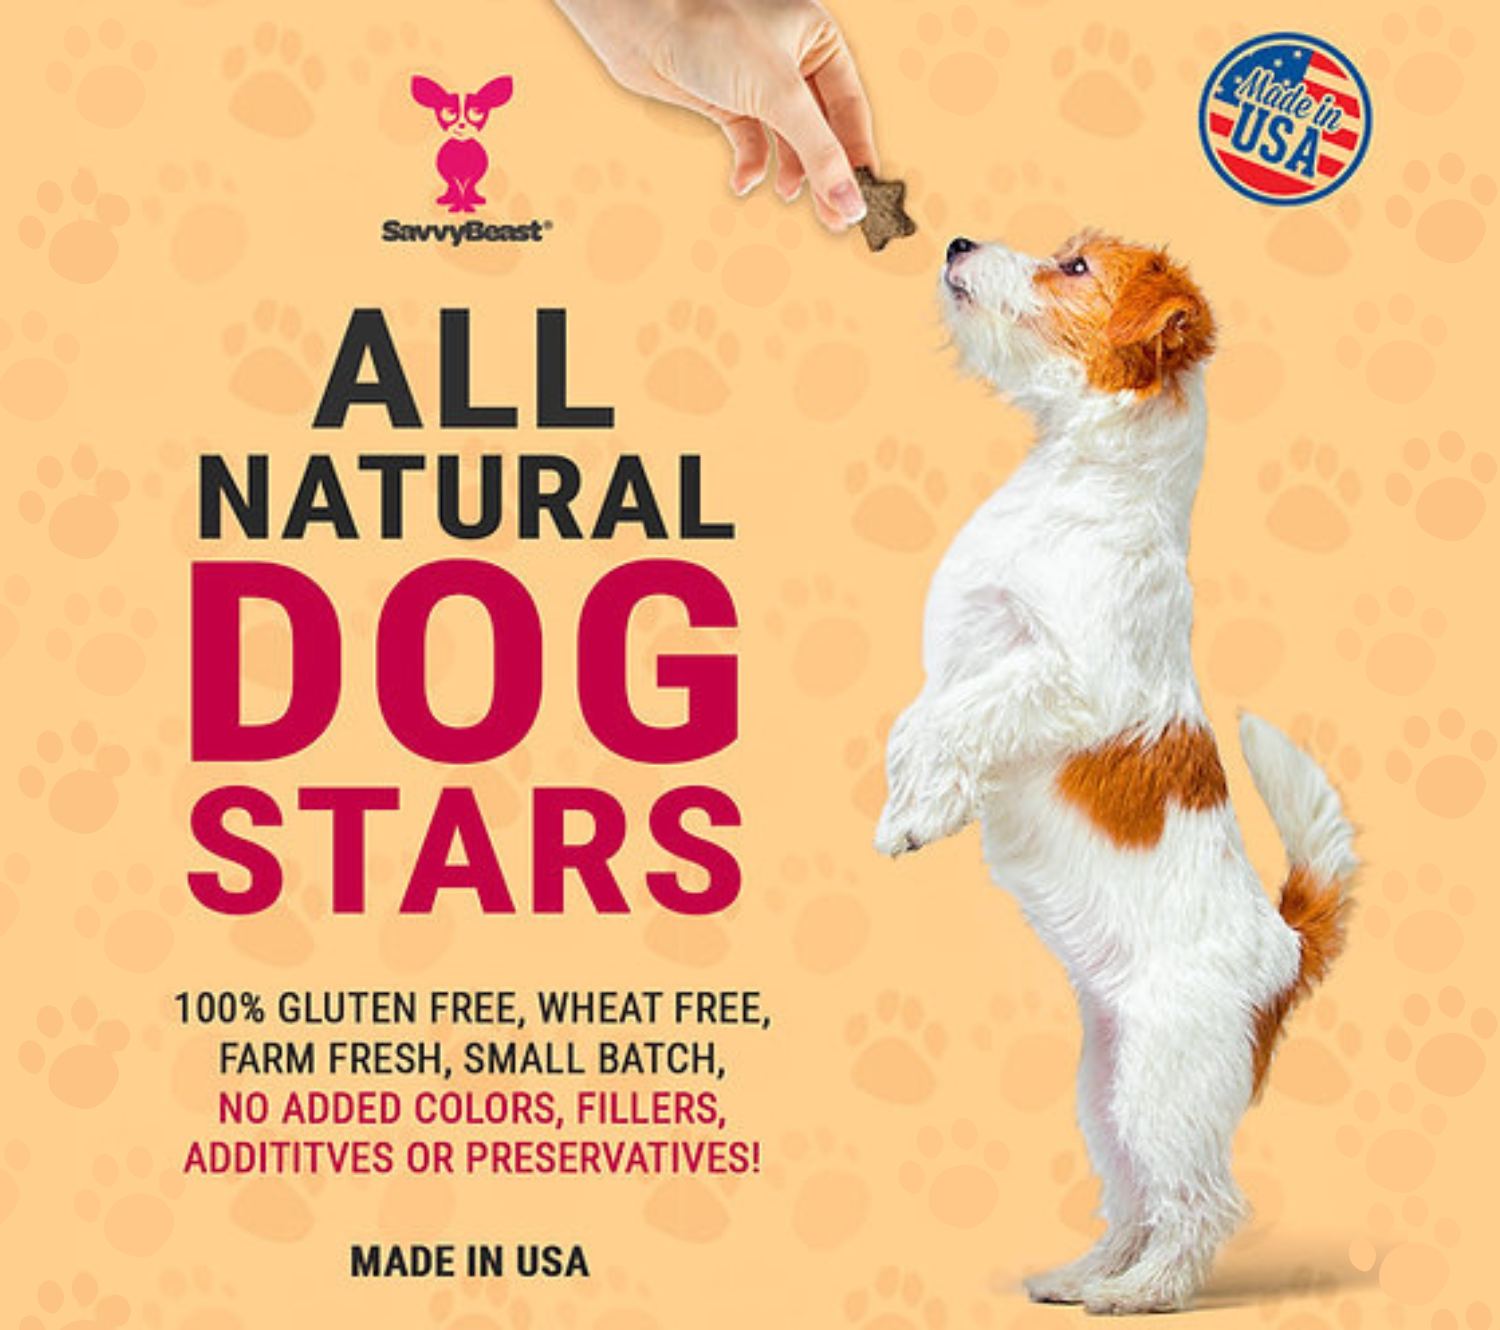 Turkey DogStars Premium Natural Treats 8 oz